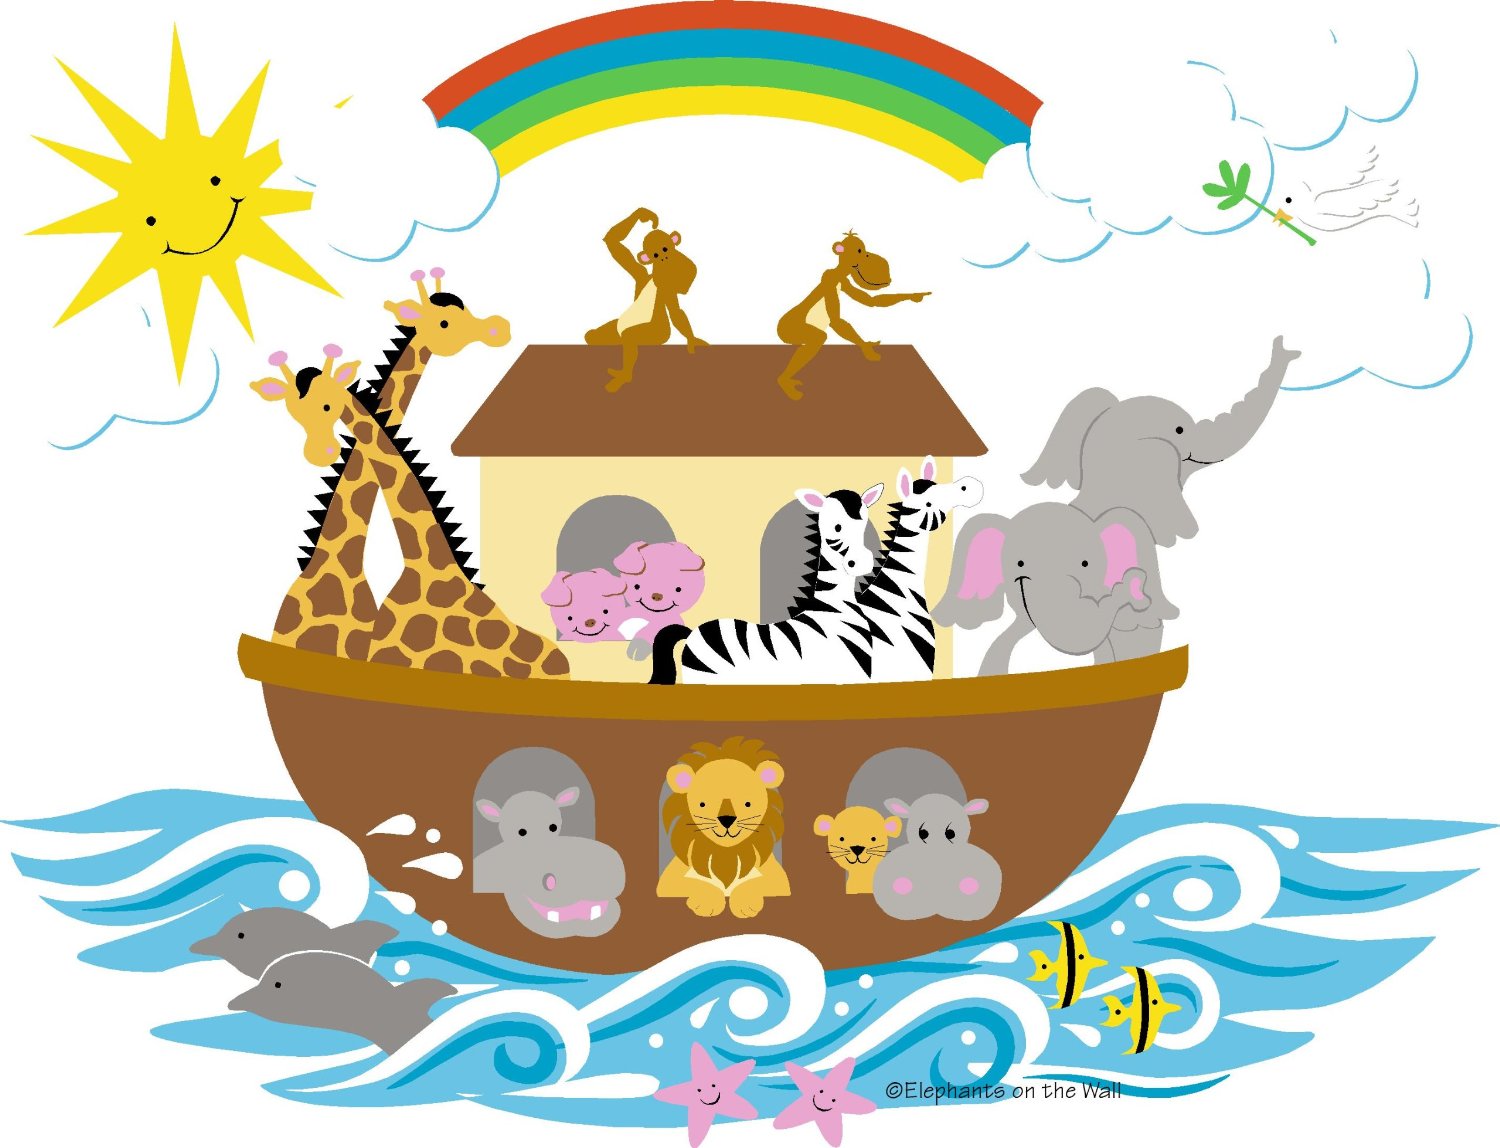 Noah's Ark Nursery School – The Congregational Church of Huntington